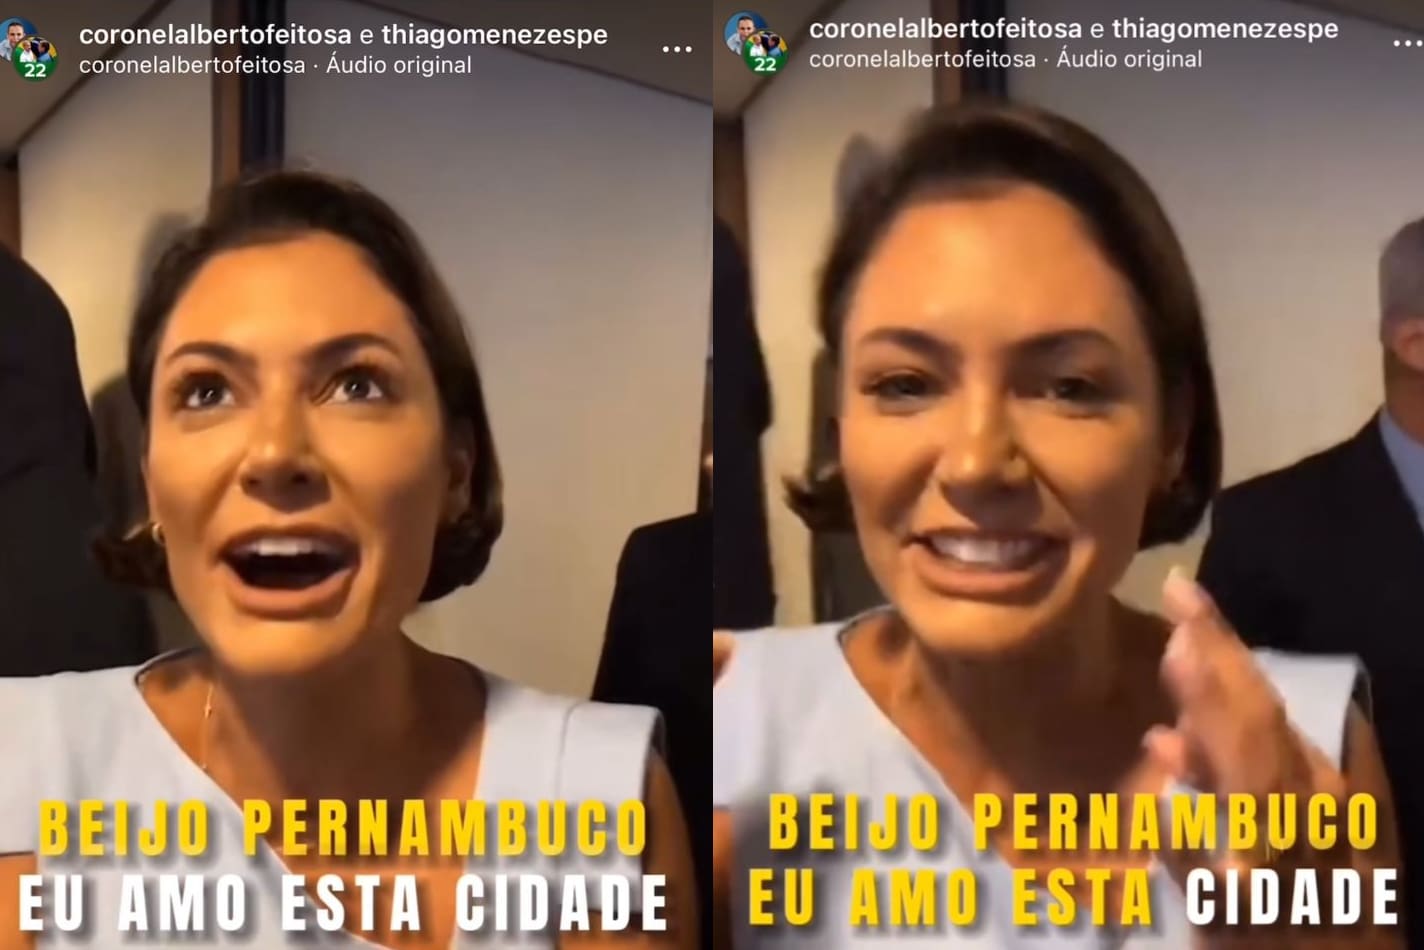  Em vídeo, Michelle Bolsonaro chama Pernambuco de cidade